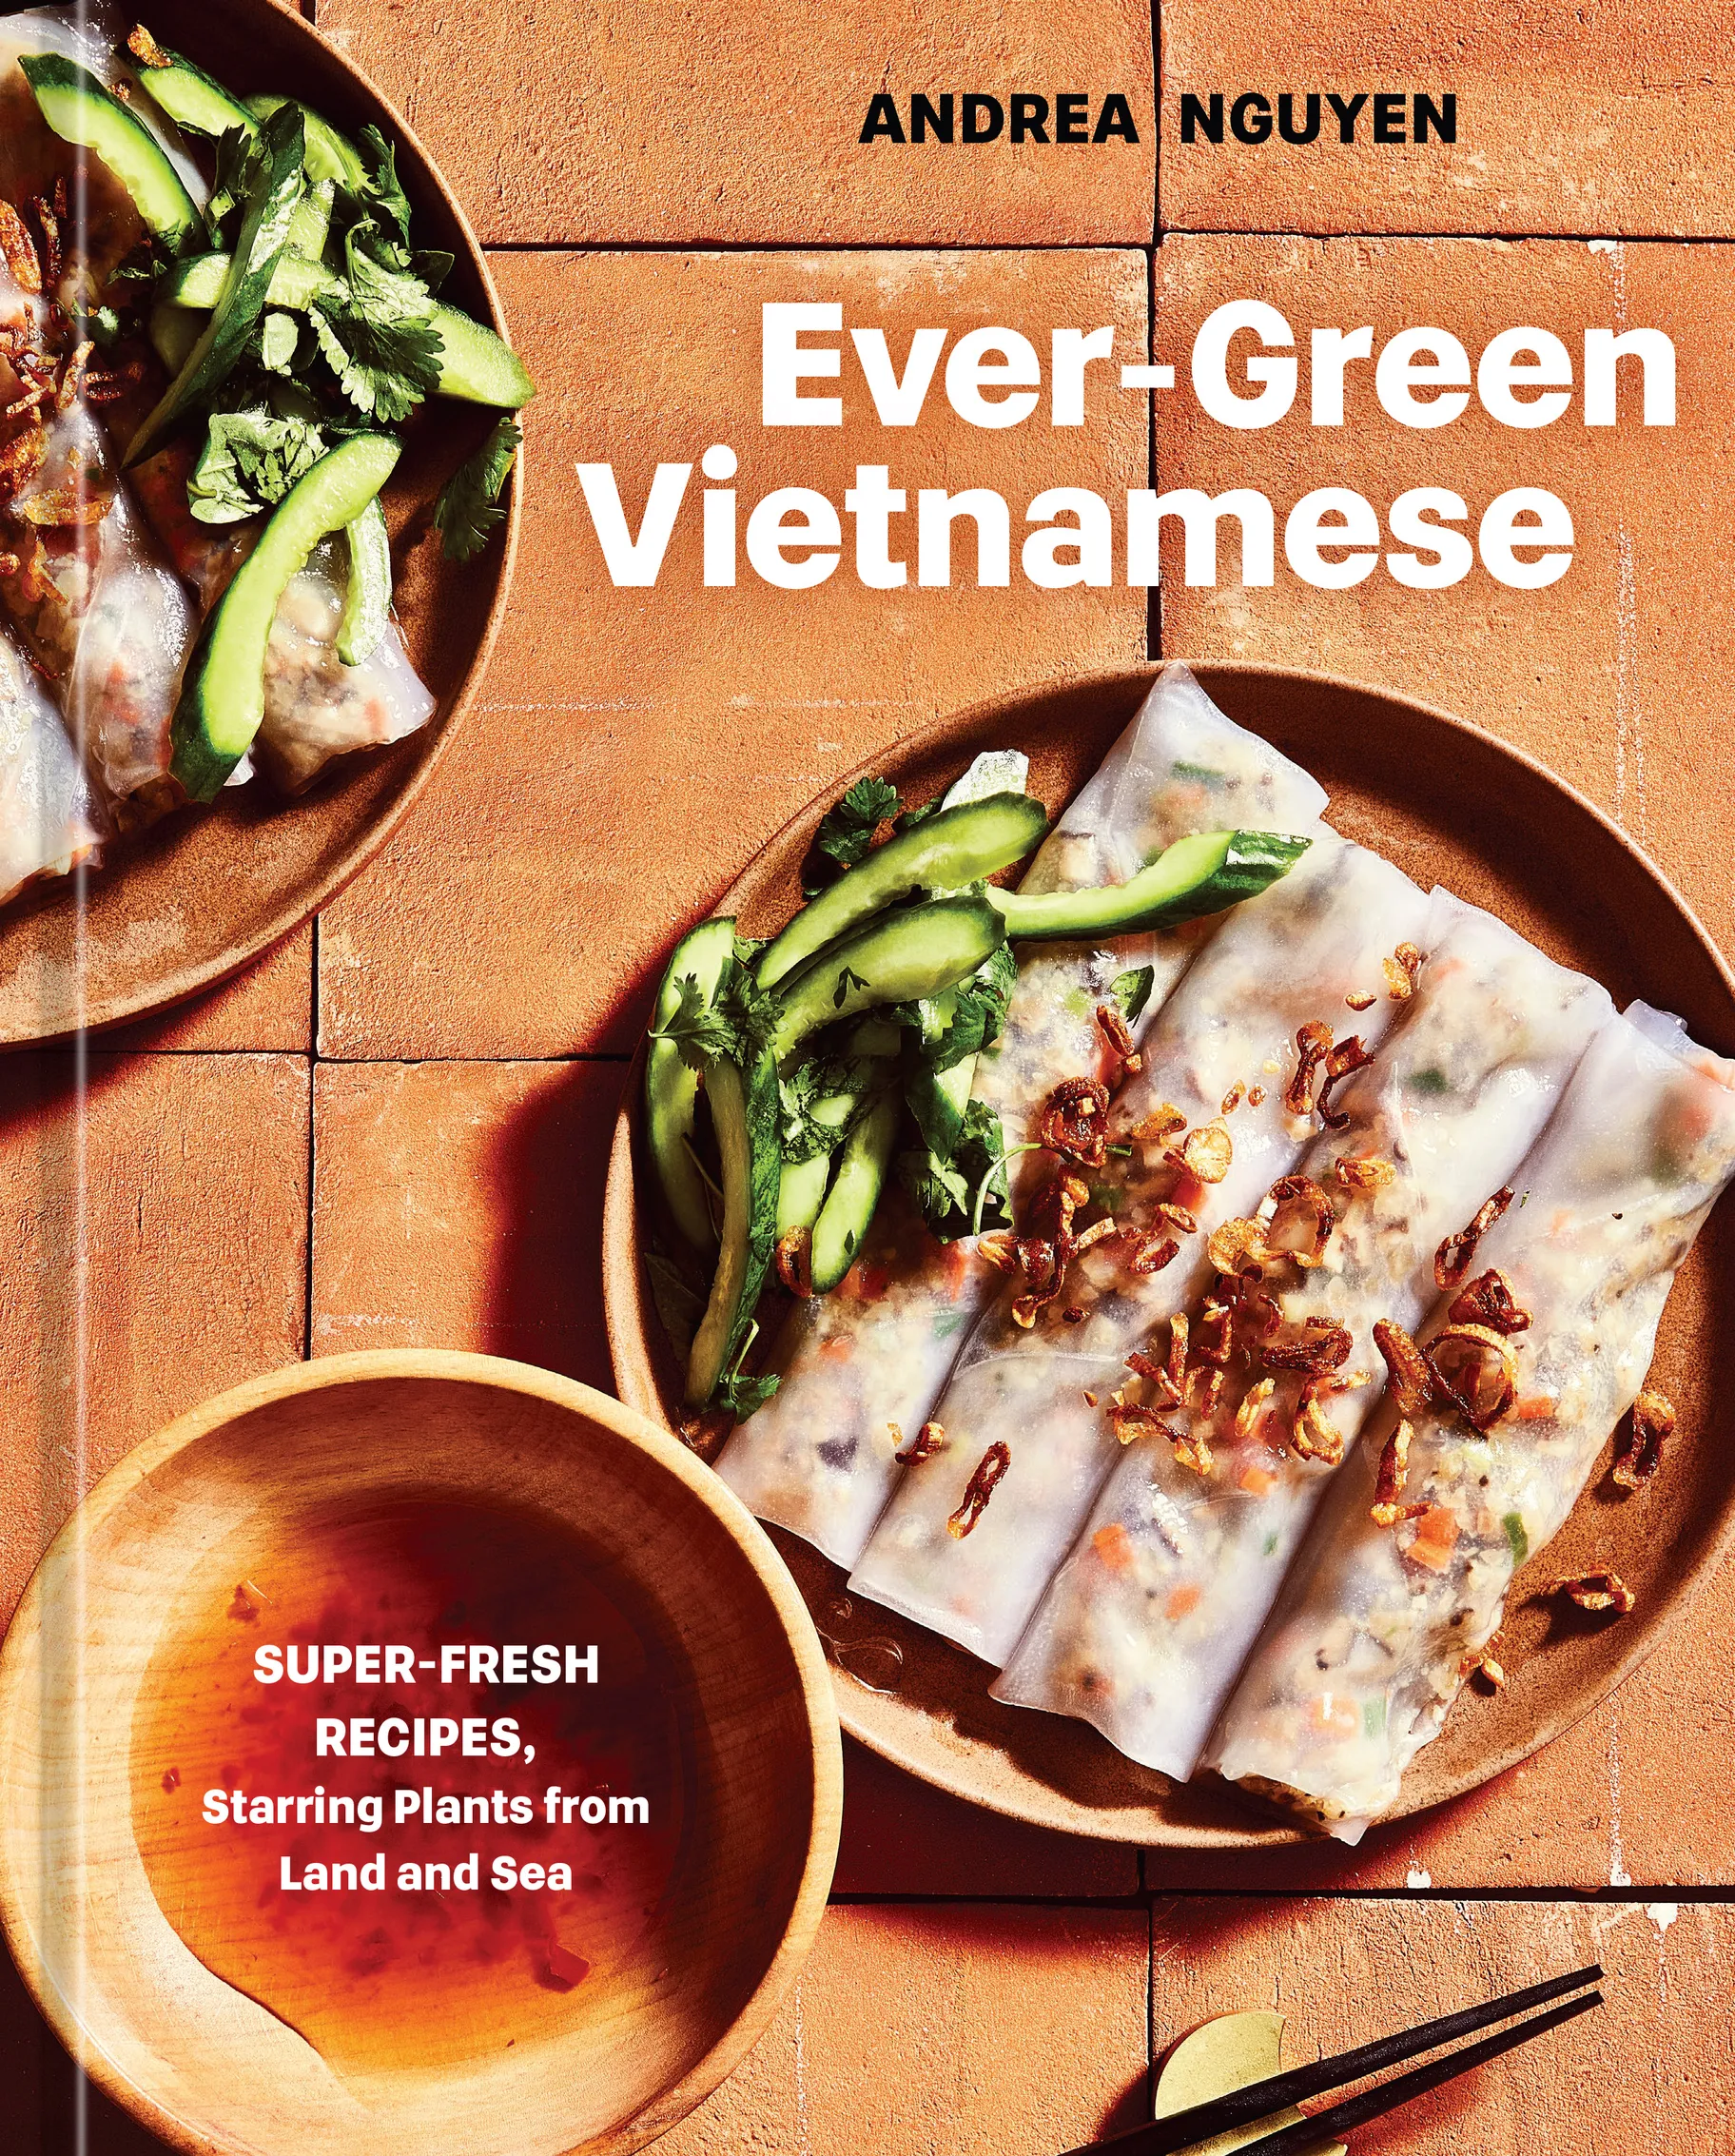 https://www.kcrw.com/culture/shows/good-food/chinese-doughnuts-comfort-food-vegetarian-vietnamese/ever-green-vietnamese-vegetarian-cooking-recipes-andrea-nguyen-fish-sauce/ever-green-vietnamese-cov.jpg/@@images/b906f3d0-9258-4478-b4e7-963b52d41b8b.webp